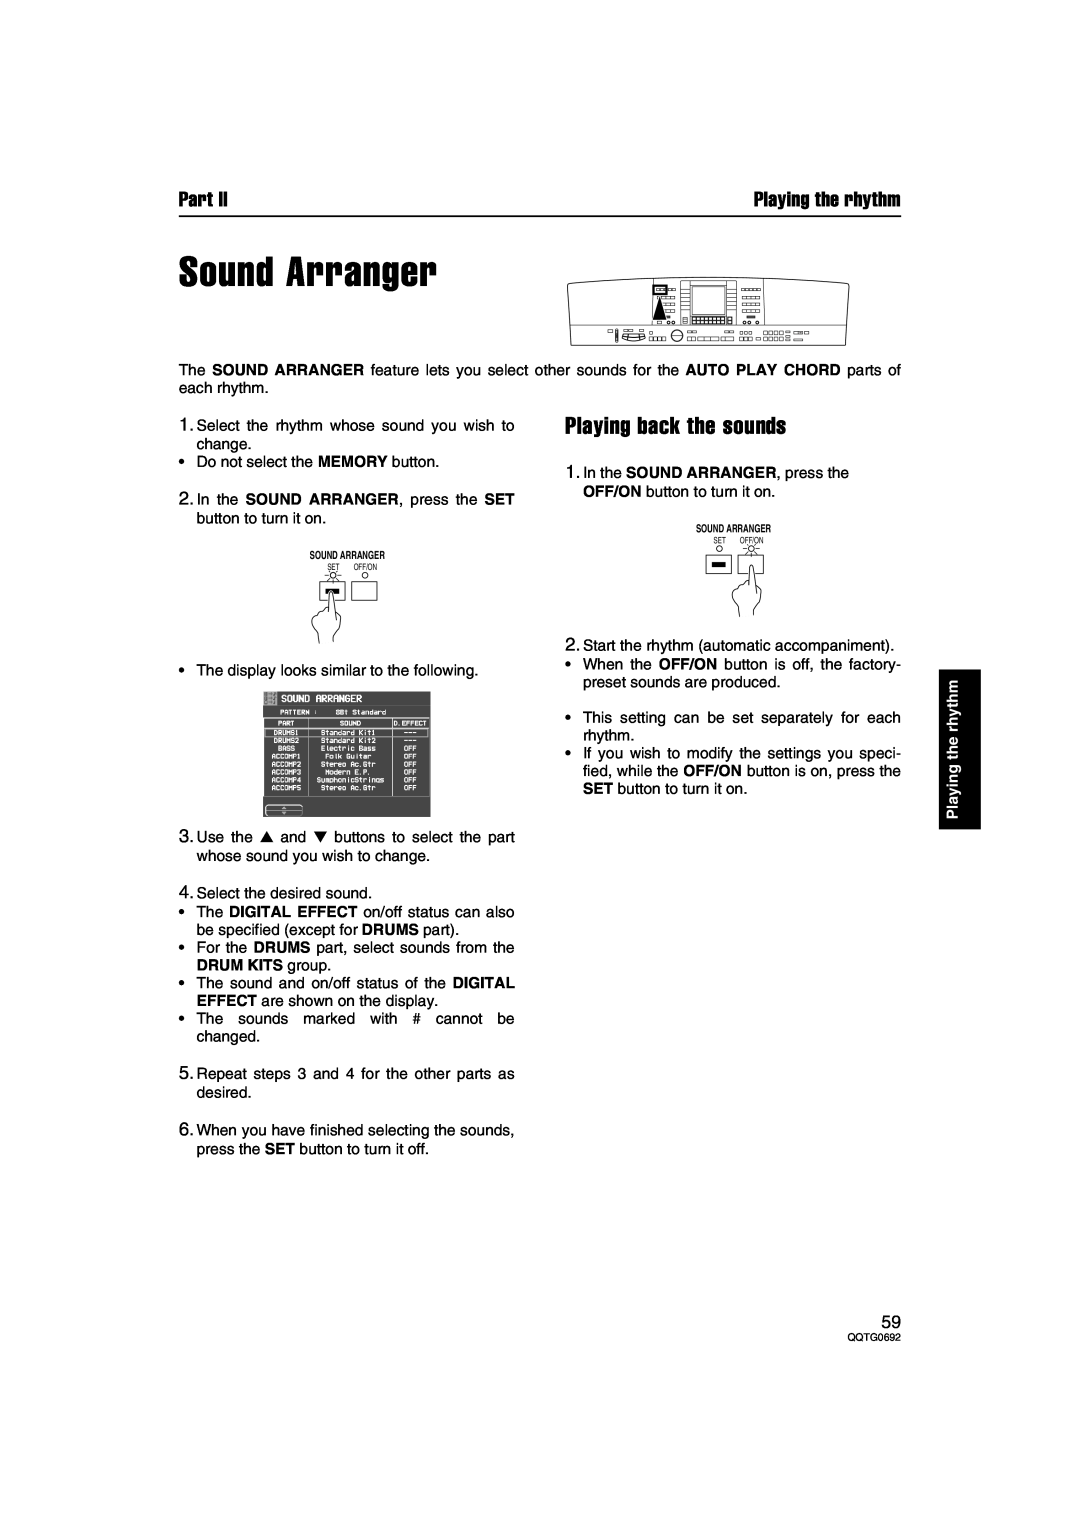 Panasonic SX-KN2400, SX-KN2600 manual Sound Arranger, Playing back the sounds, Part, Playing the rhythm 